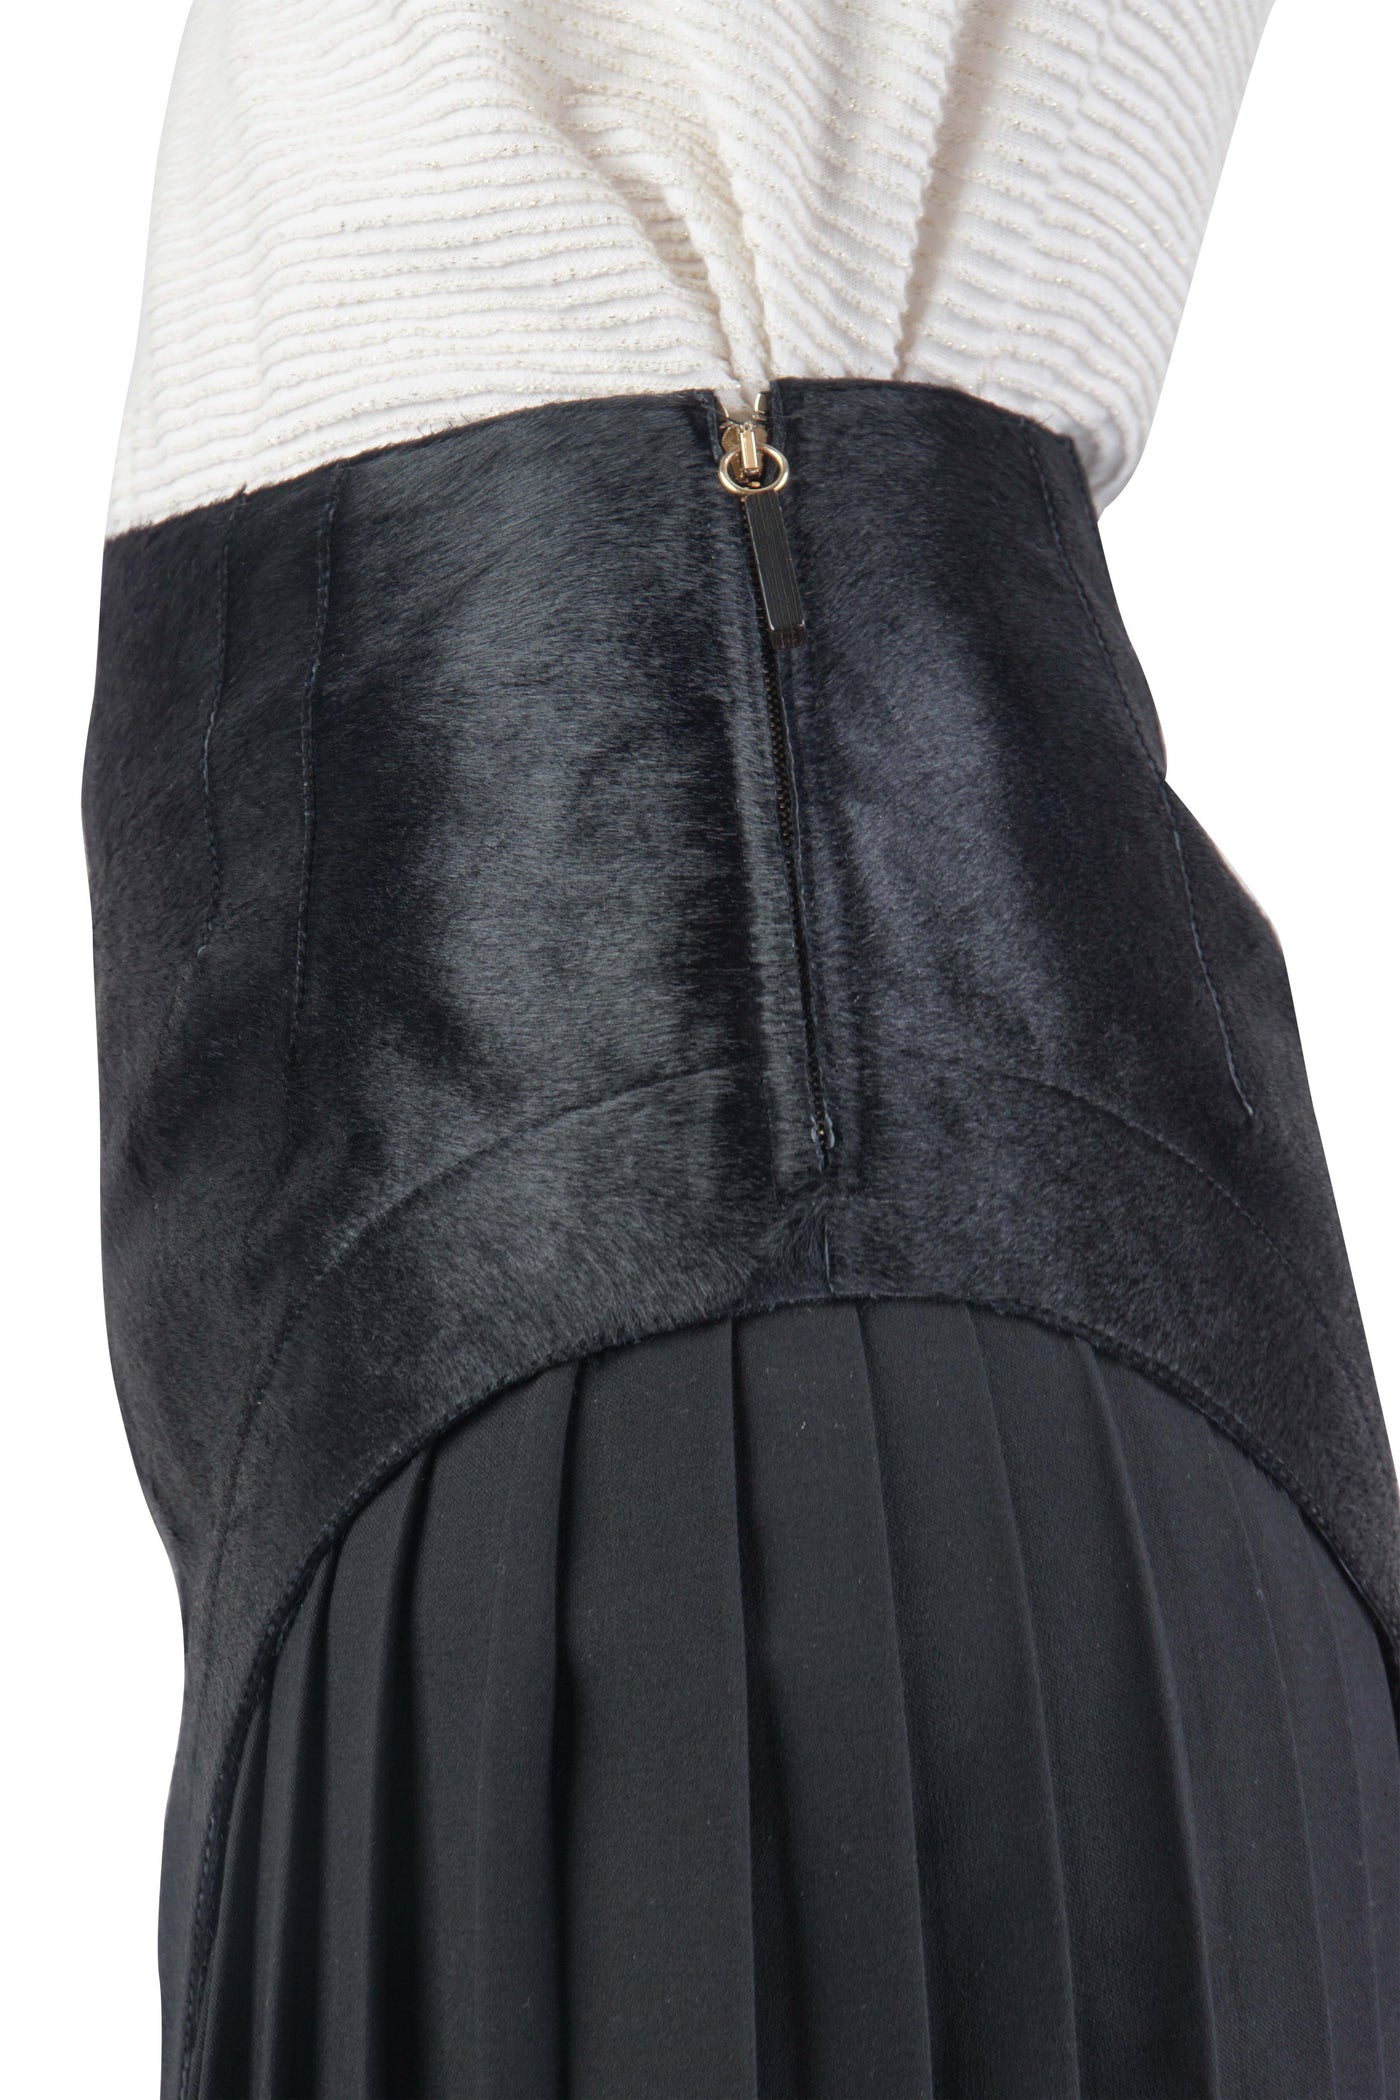 Ponyhair pleat black skirt